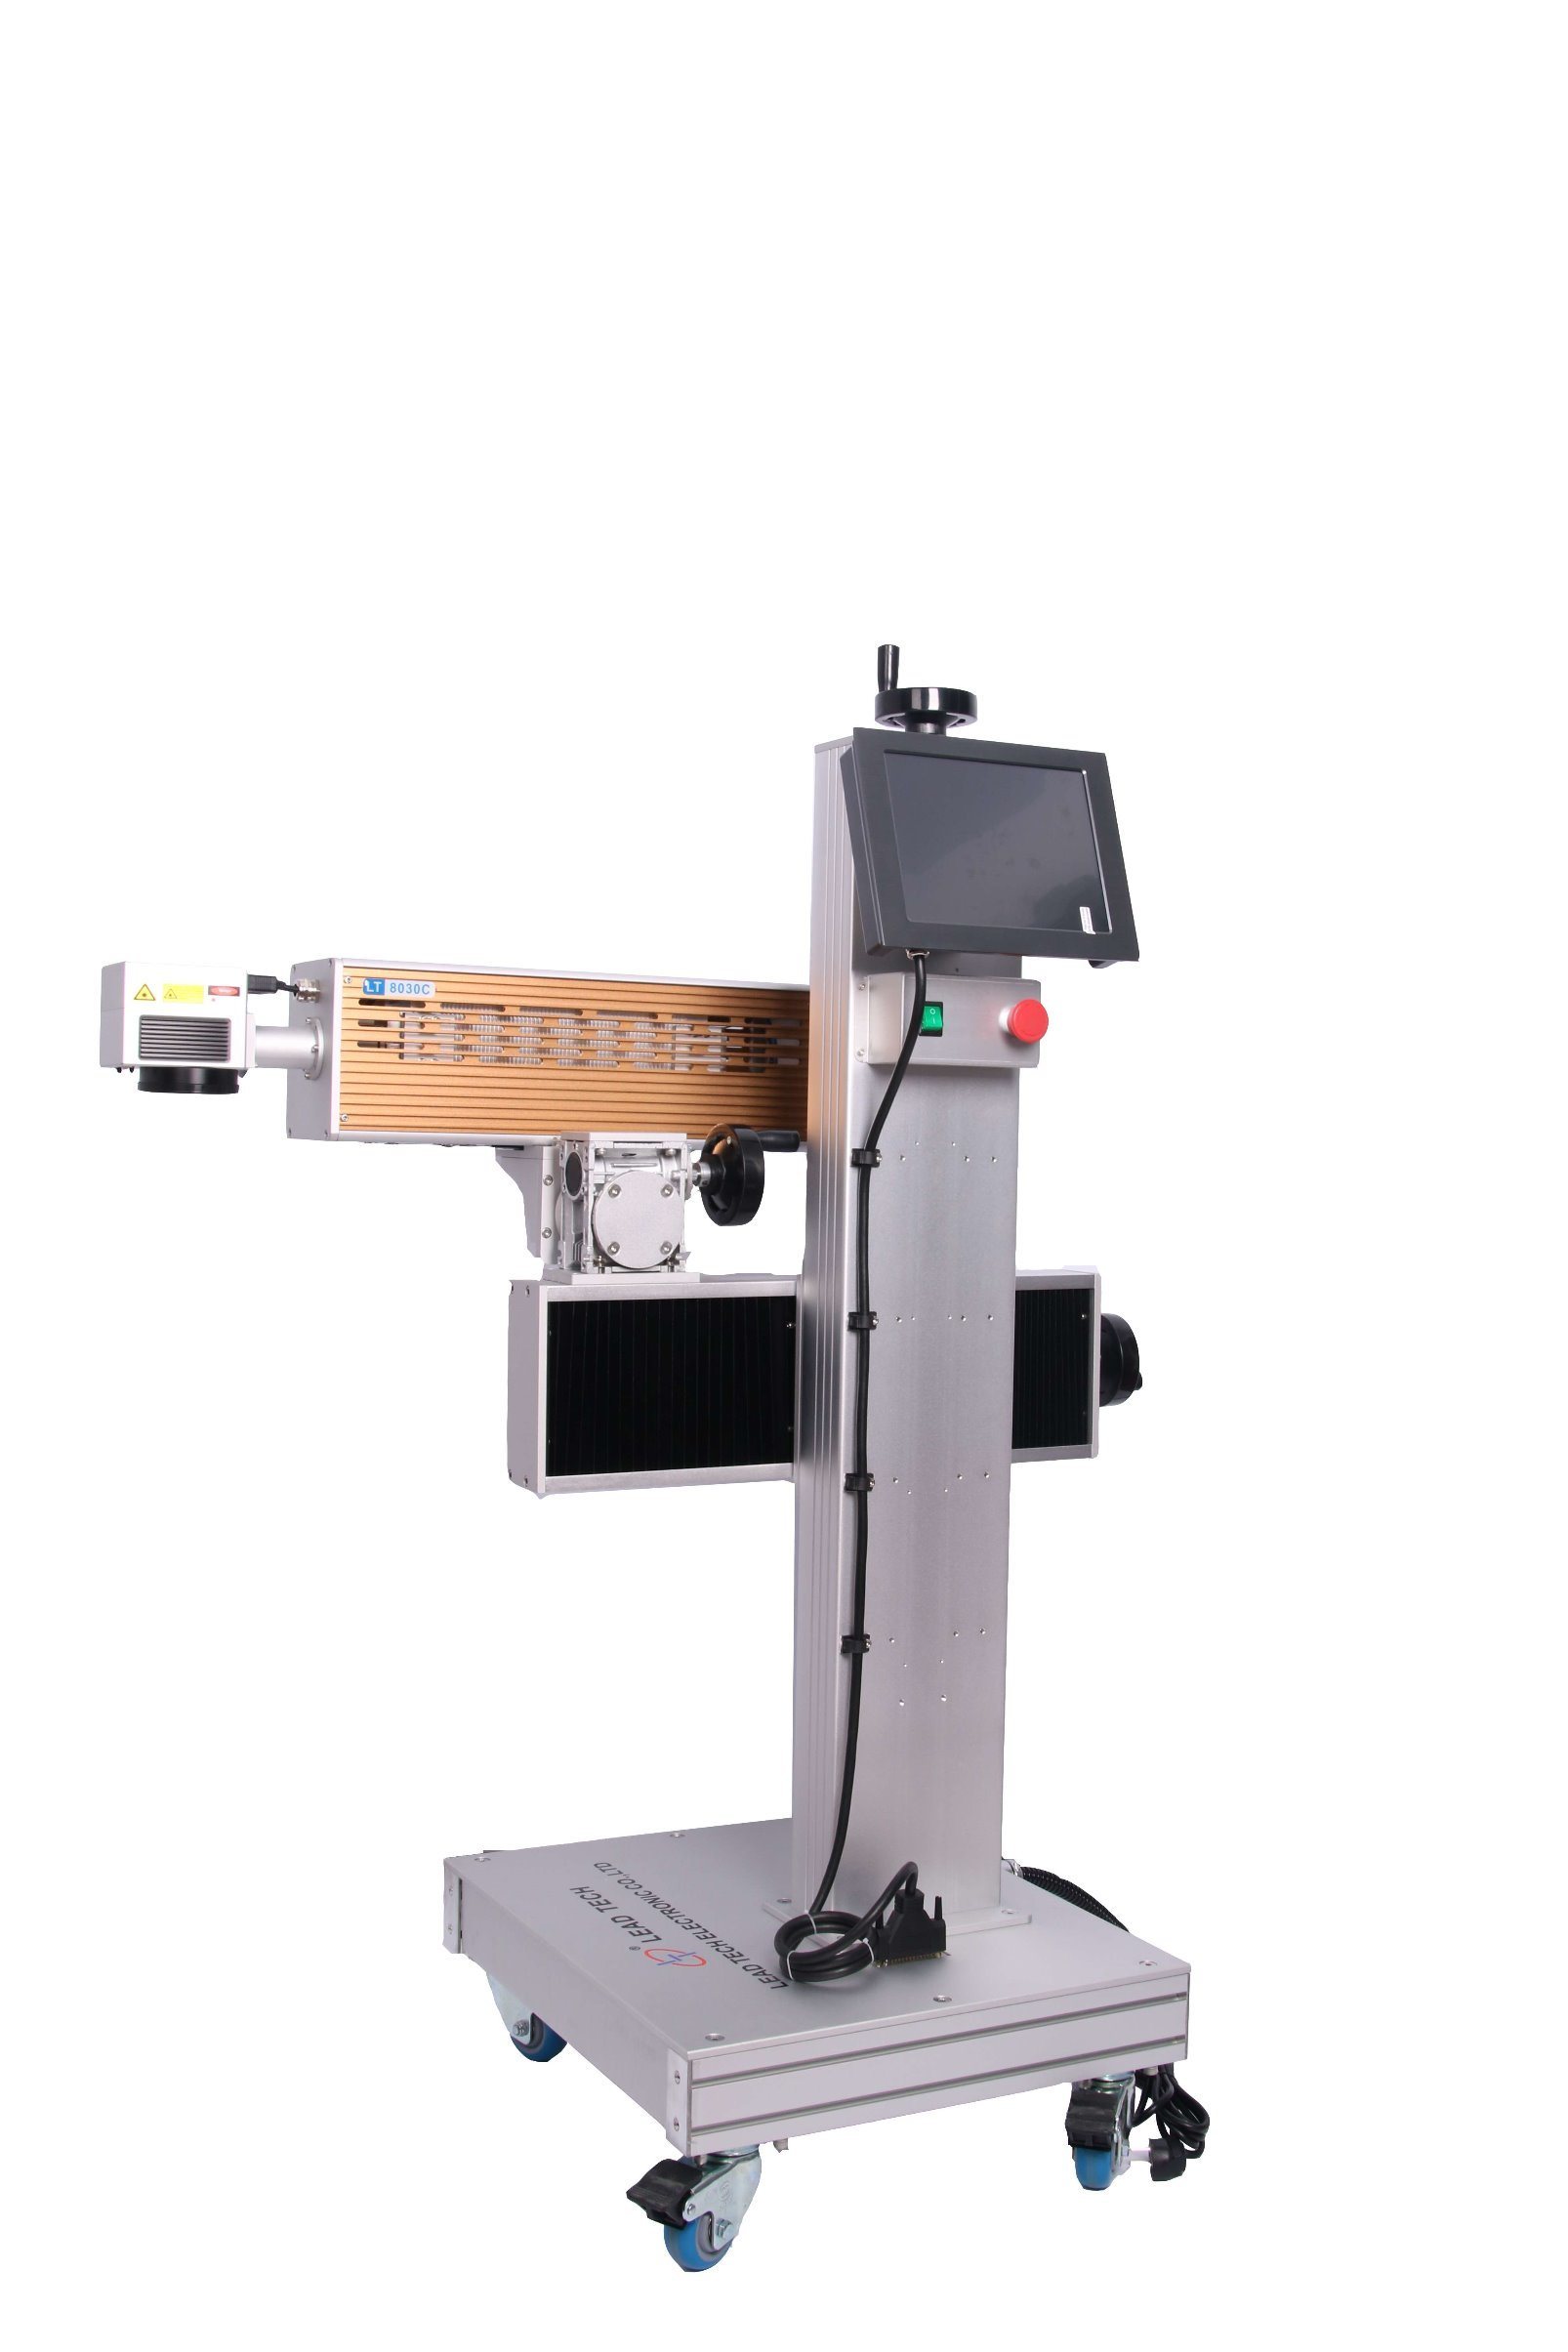 Lt8015c/Lt8030c CO2 High Performance Economic Laser Marking Printer